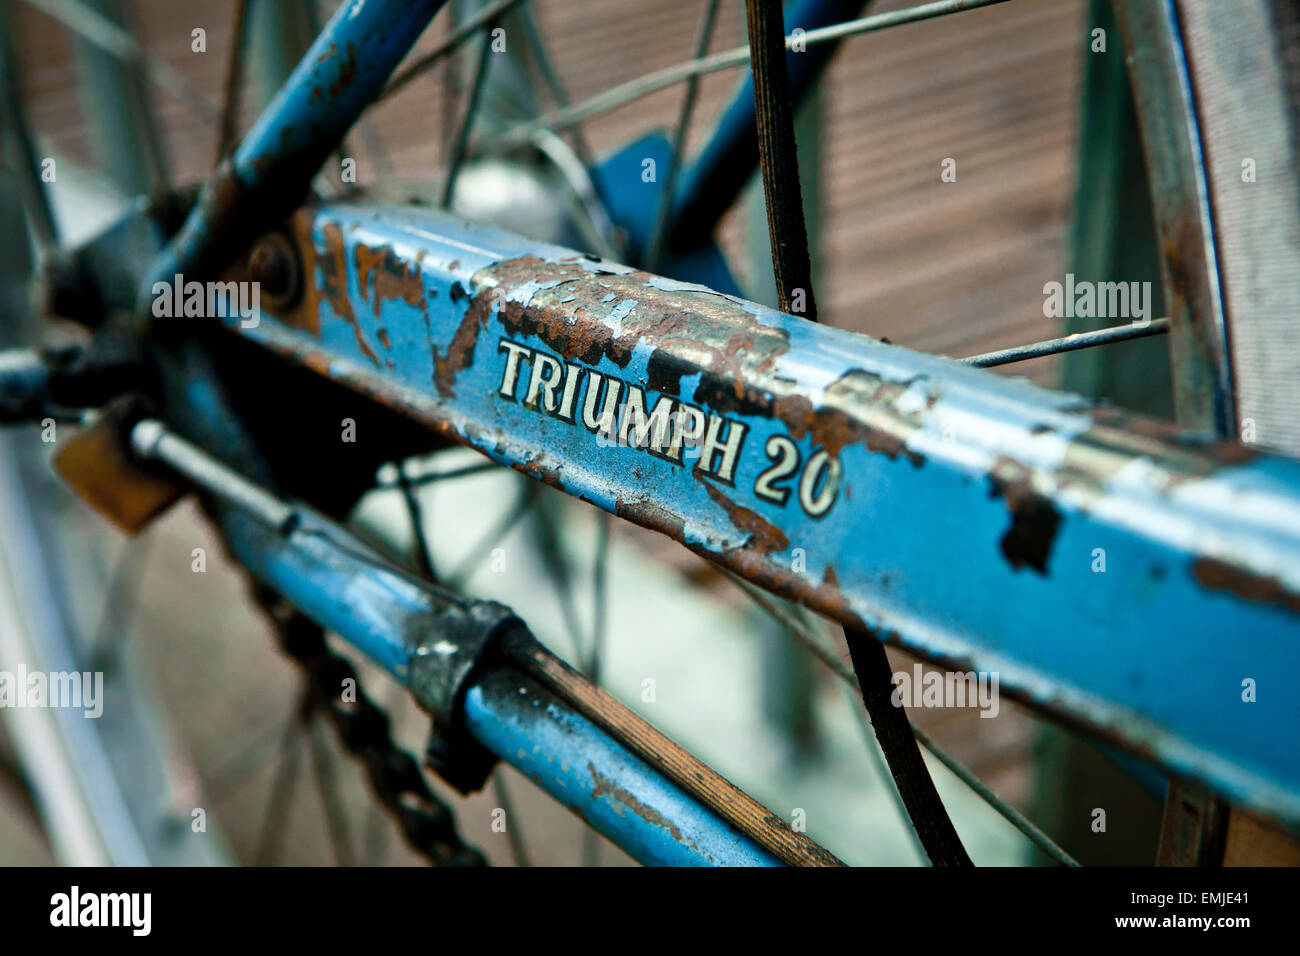 Triumph 20 bicycle Stock Photo - Alamy